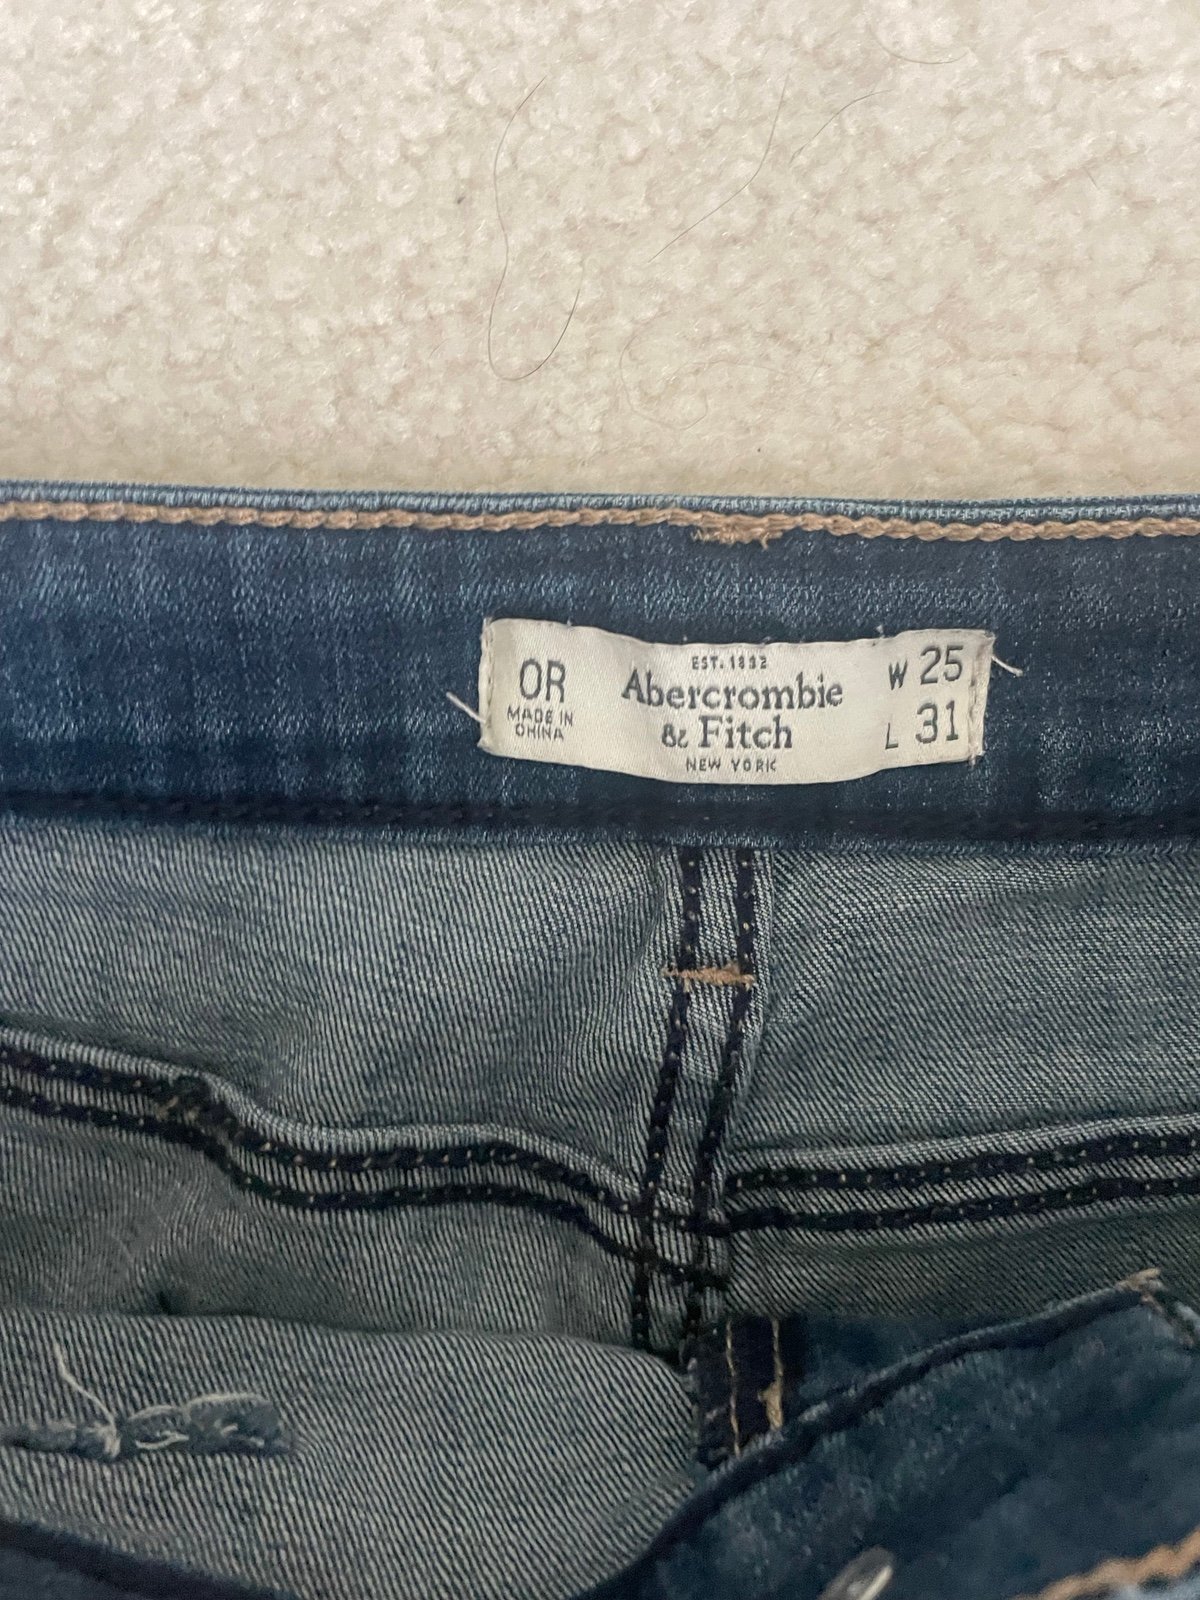 Perfect Abercrombie Skinny Jeans size 25 ikgEddUEG Wholesale